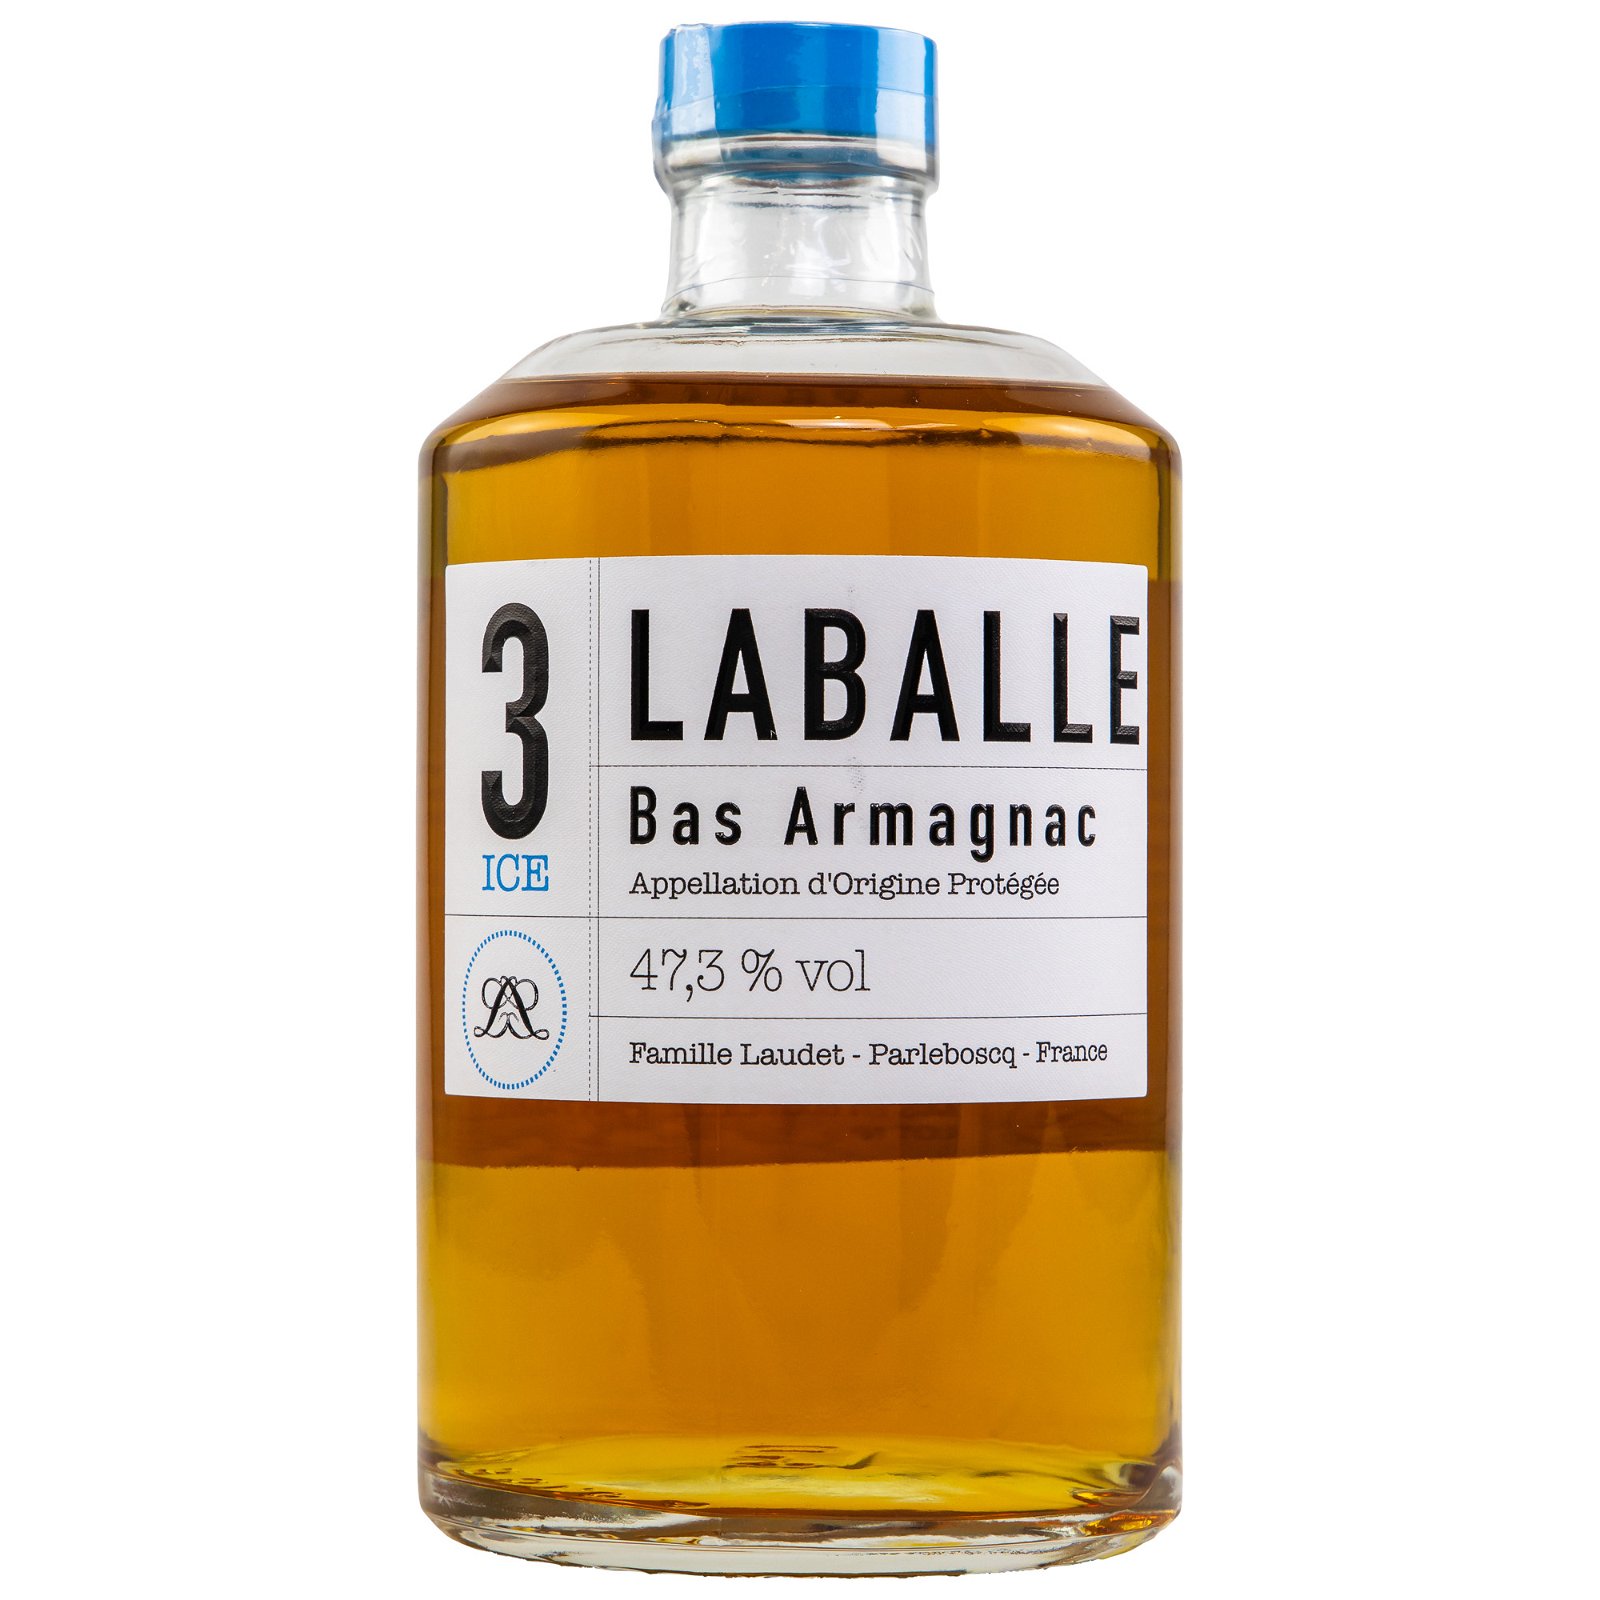 Château Laballe 3 Jahre ICE Bas-Armagnac